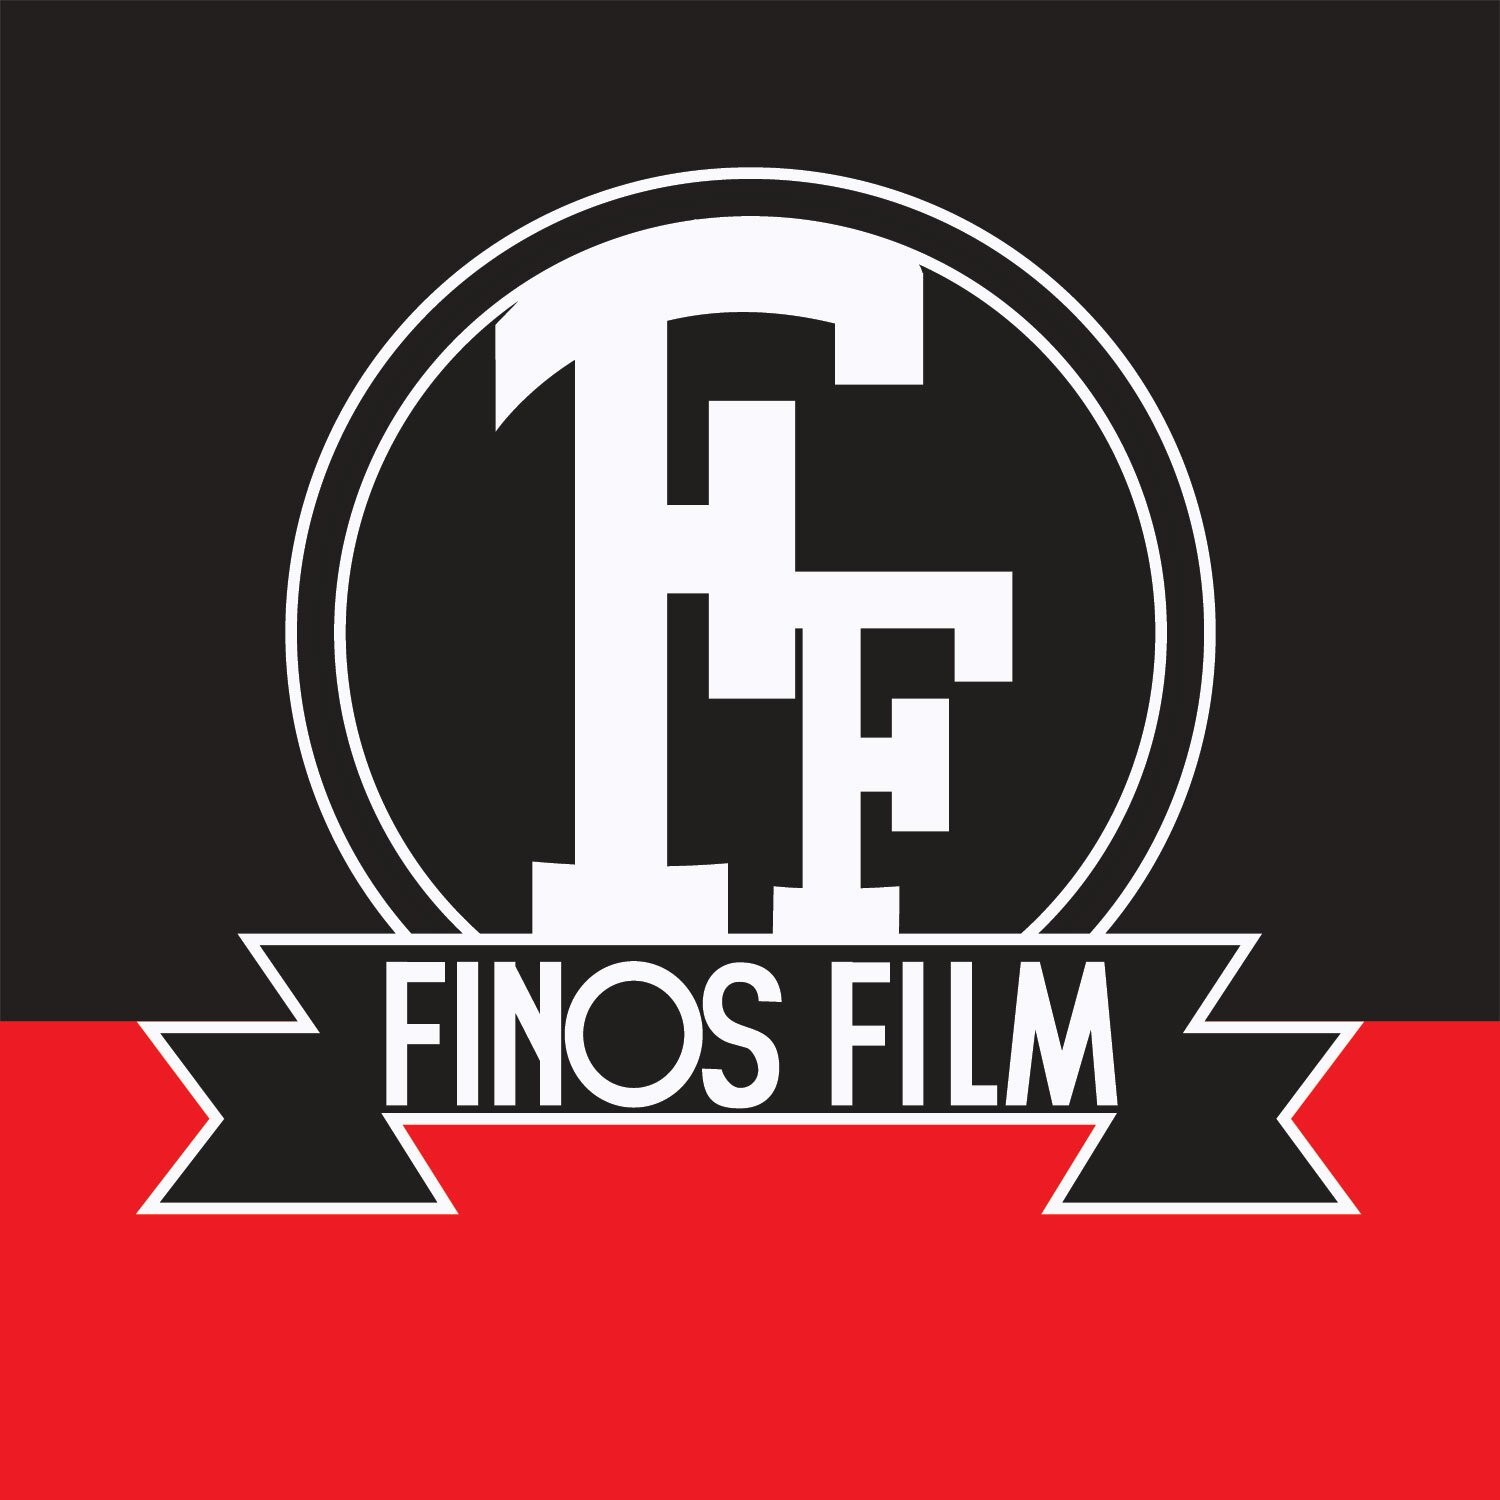 Finos Film: Δημοσίευσε βίντεο με τον Θανάση Βέγγο για τις παρακολουθήσεις